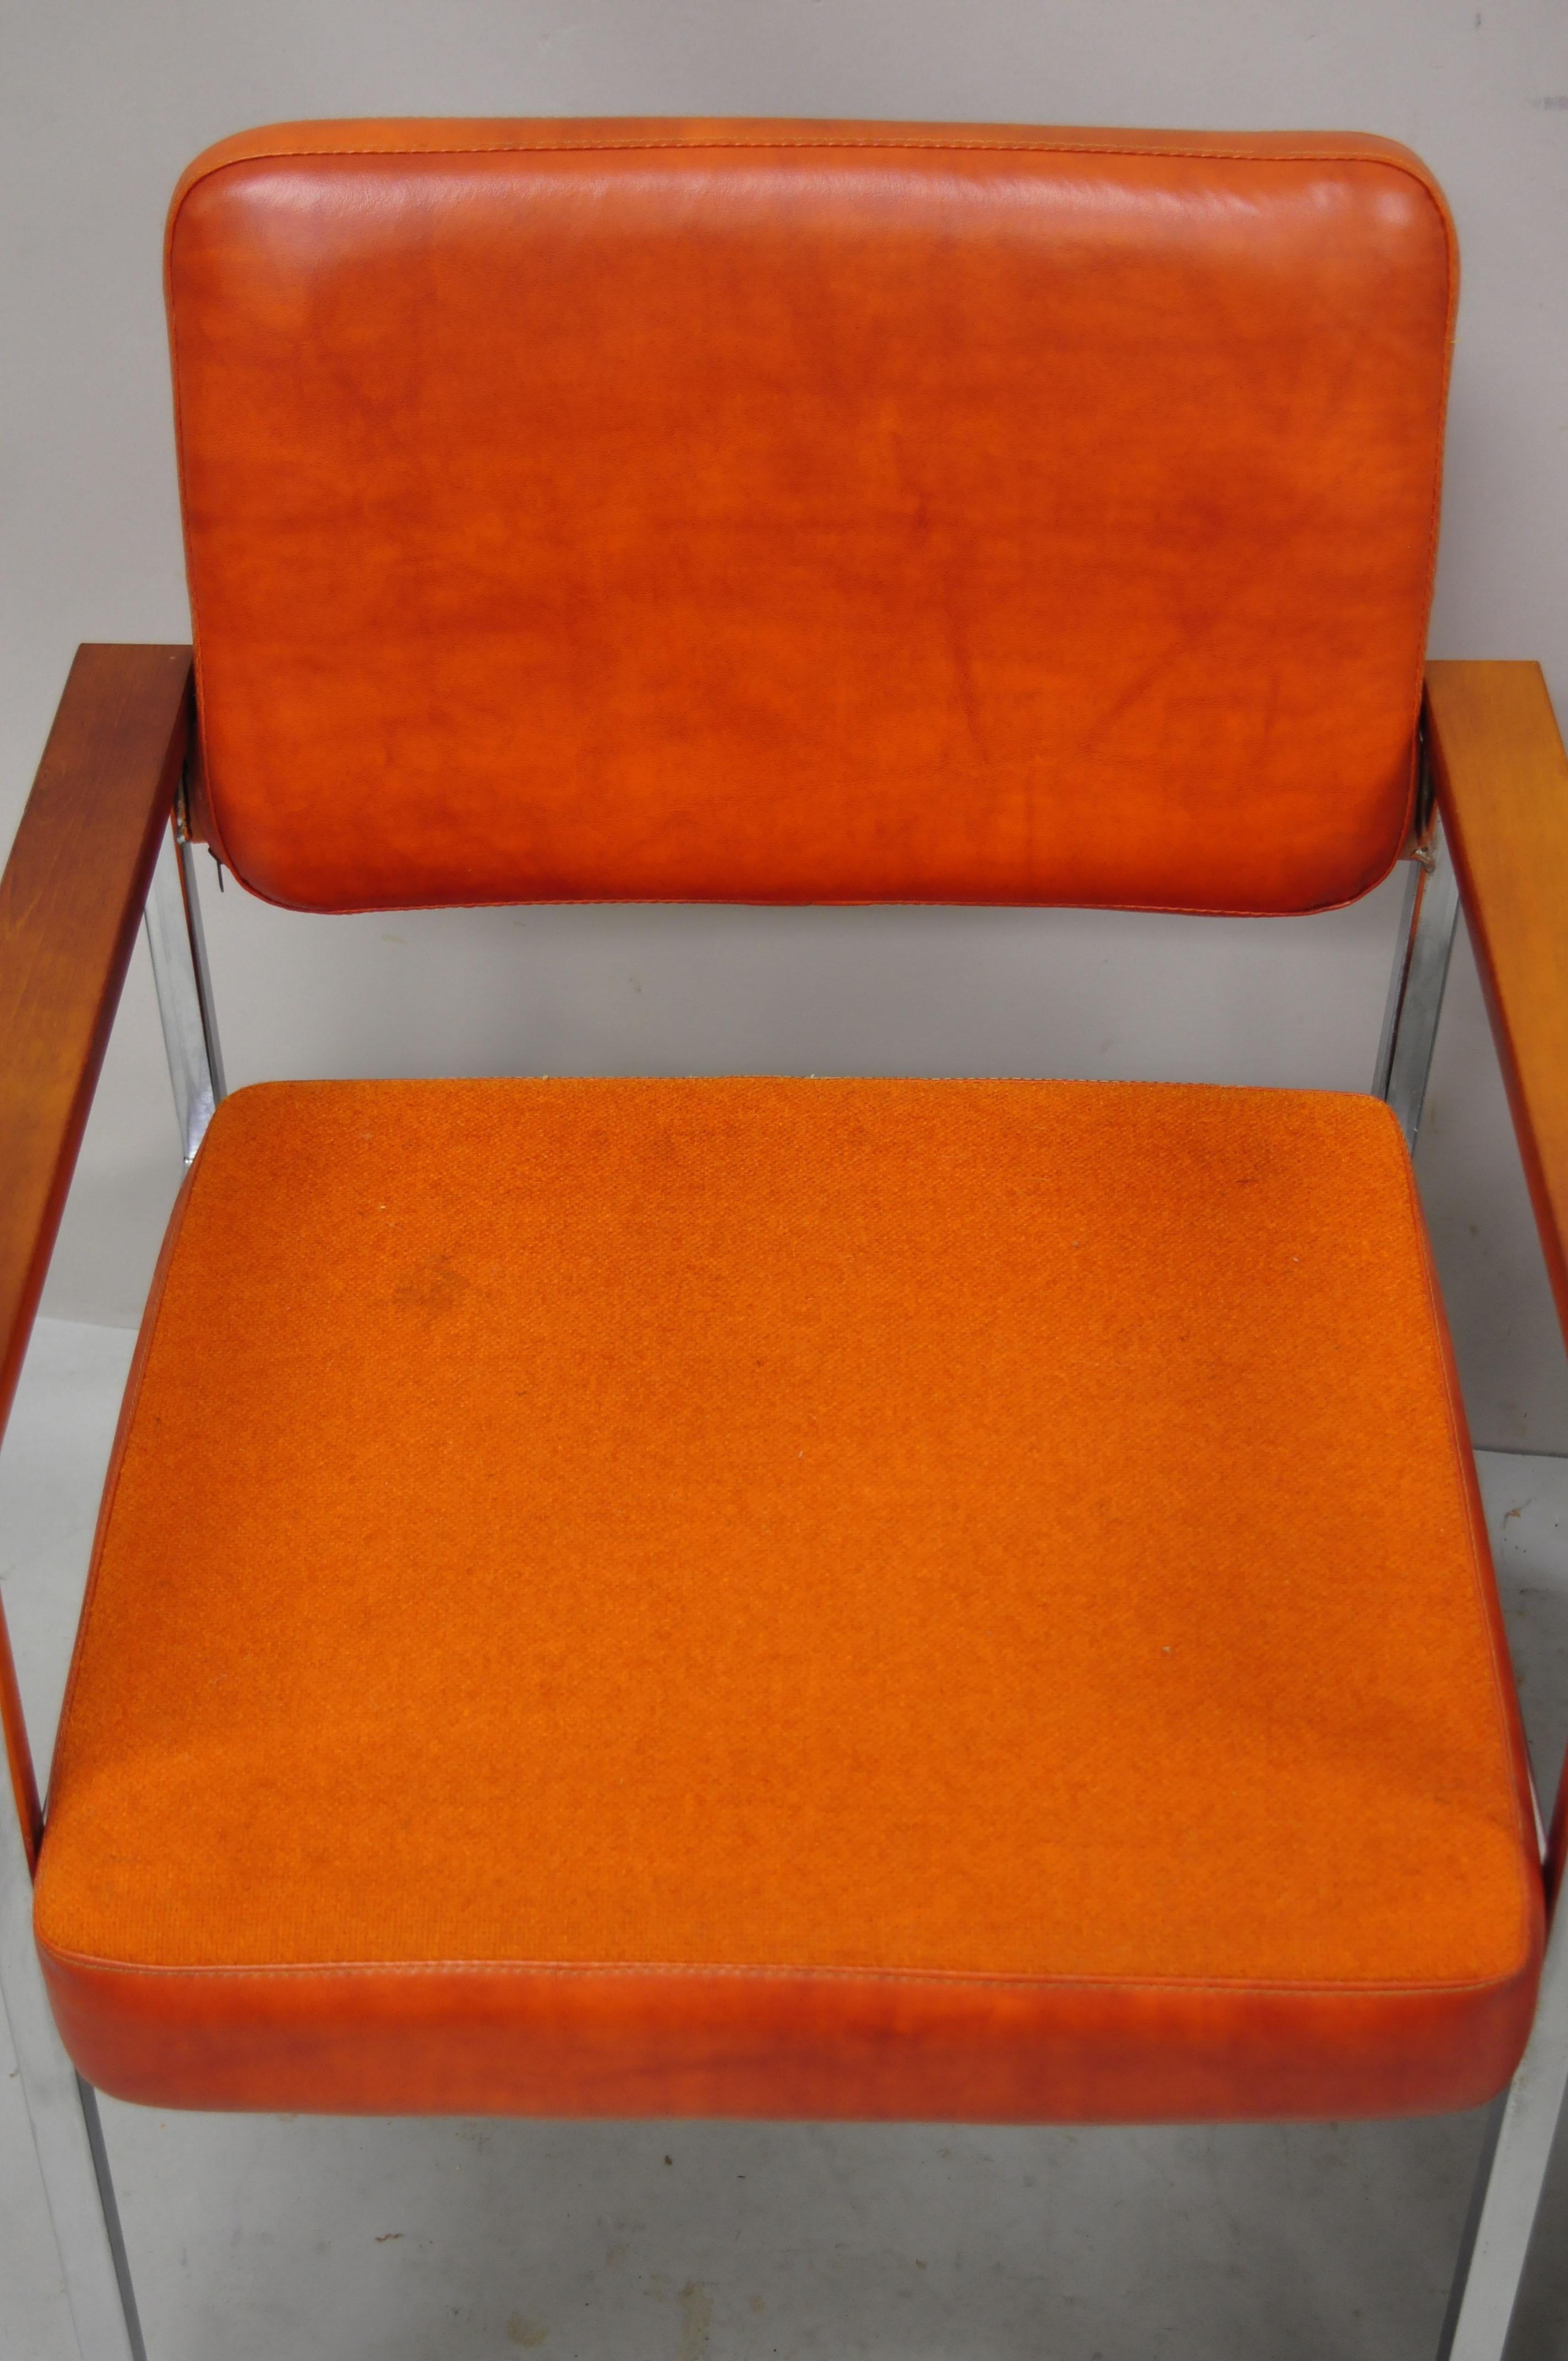 North American Mid Century Modern Orange Naugahyde Chrome Frame Lounge Arm Chairs by Malibu Ind